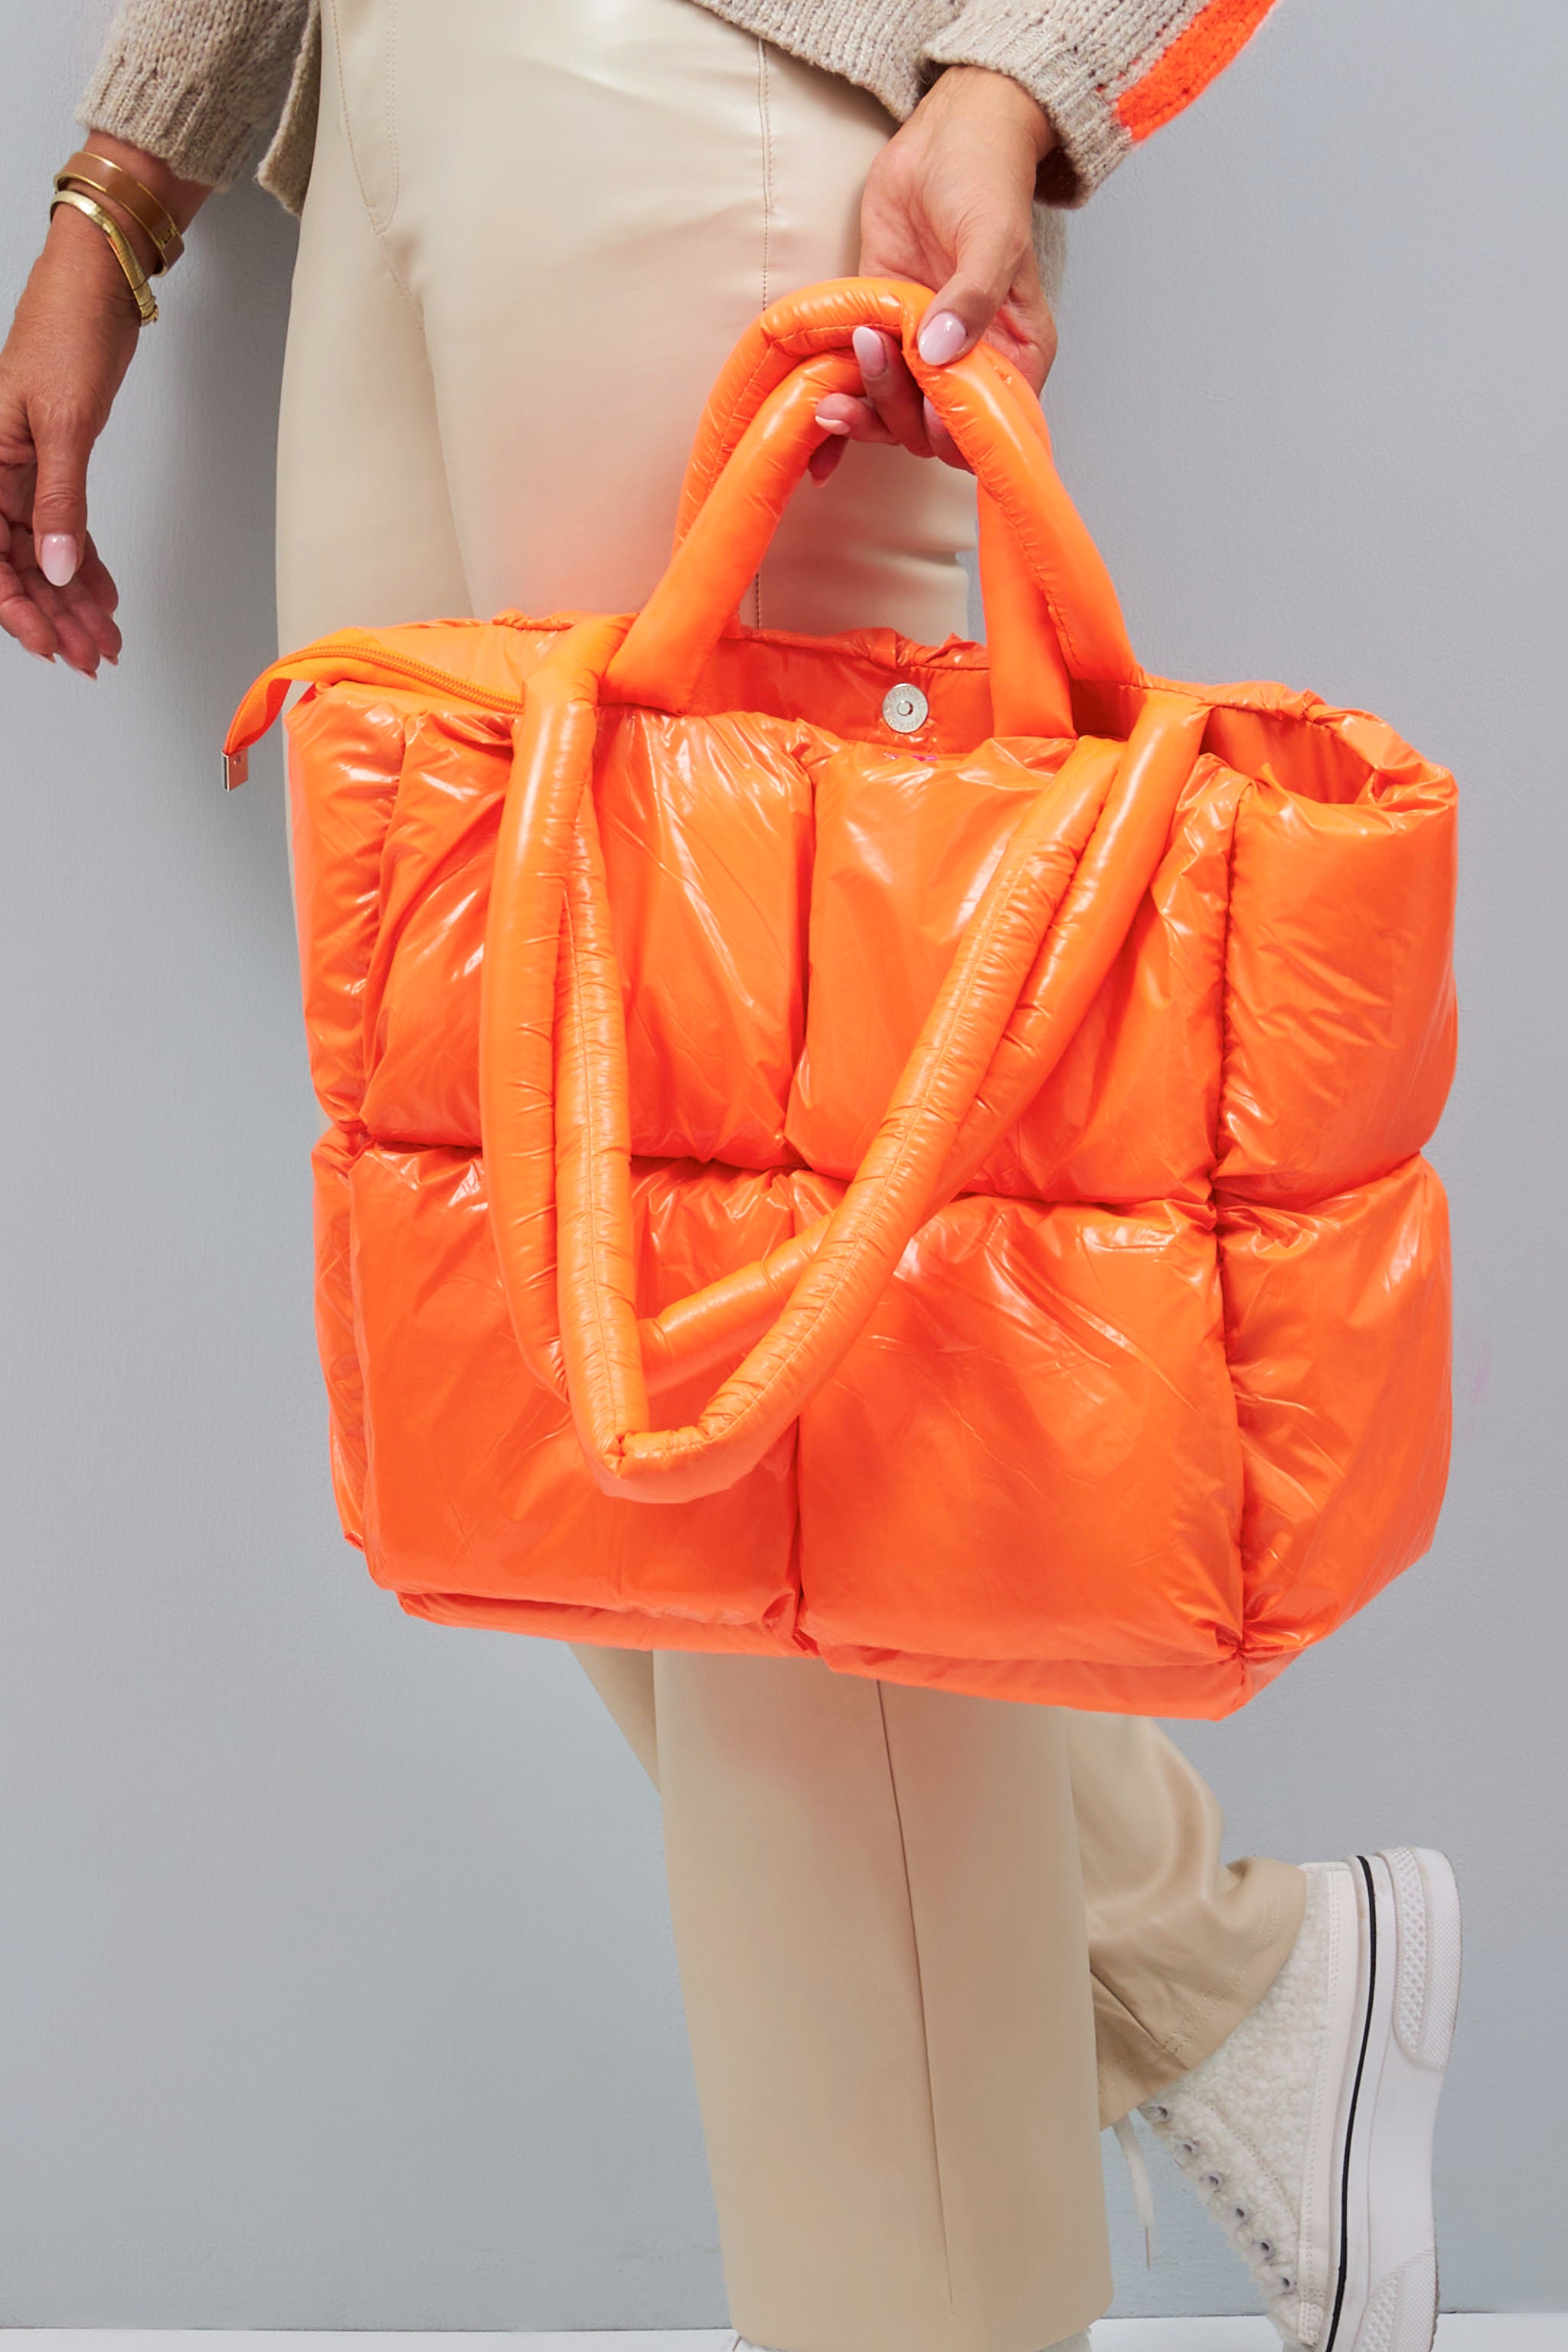 Quilted bag, orange